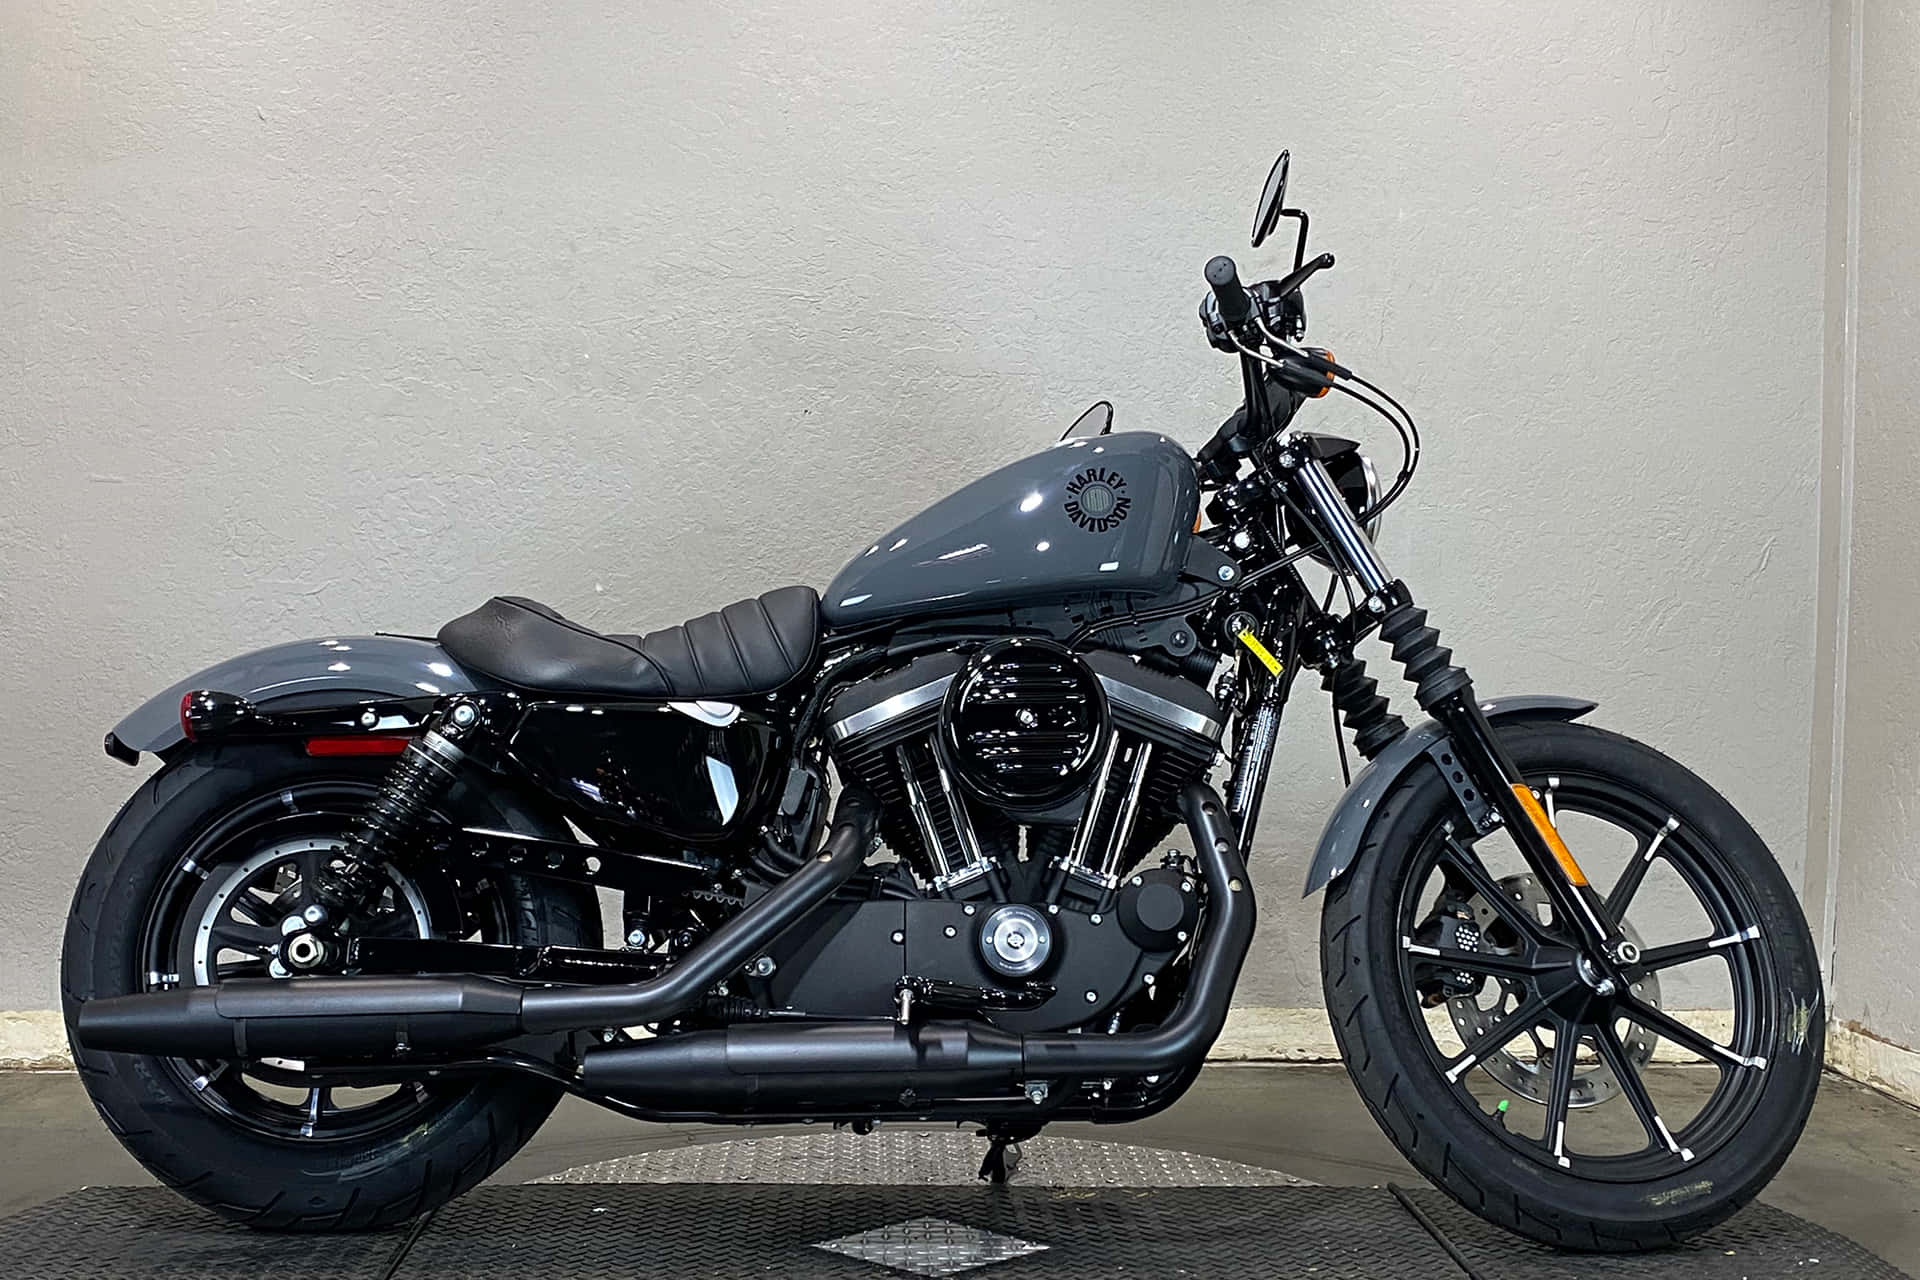 Enjoy the feeling of freedom on a sleek Harley Davidson motorcycle